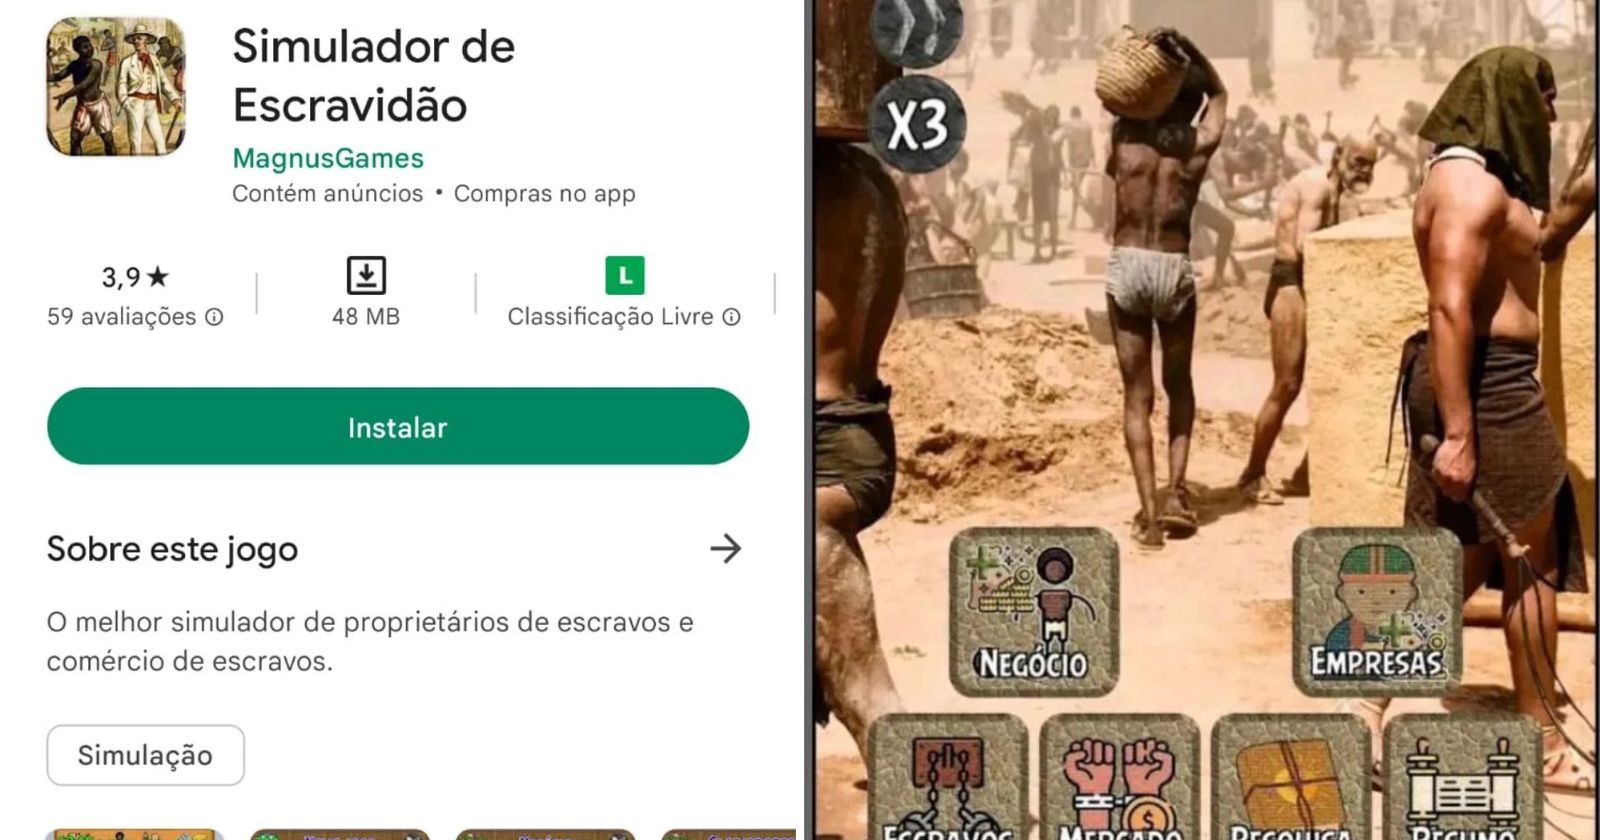 Brazil: 'Slavery Simulator' Game Sparks Outrage, Google Responds